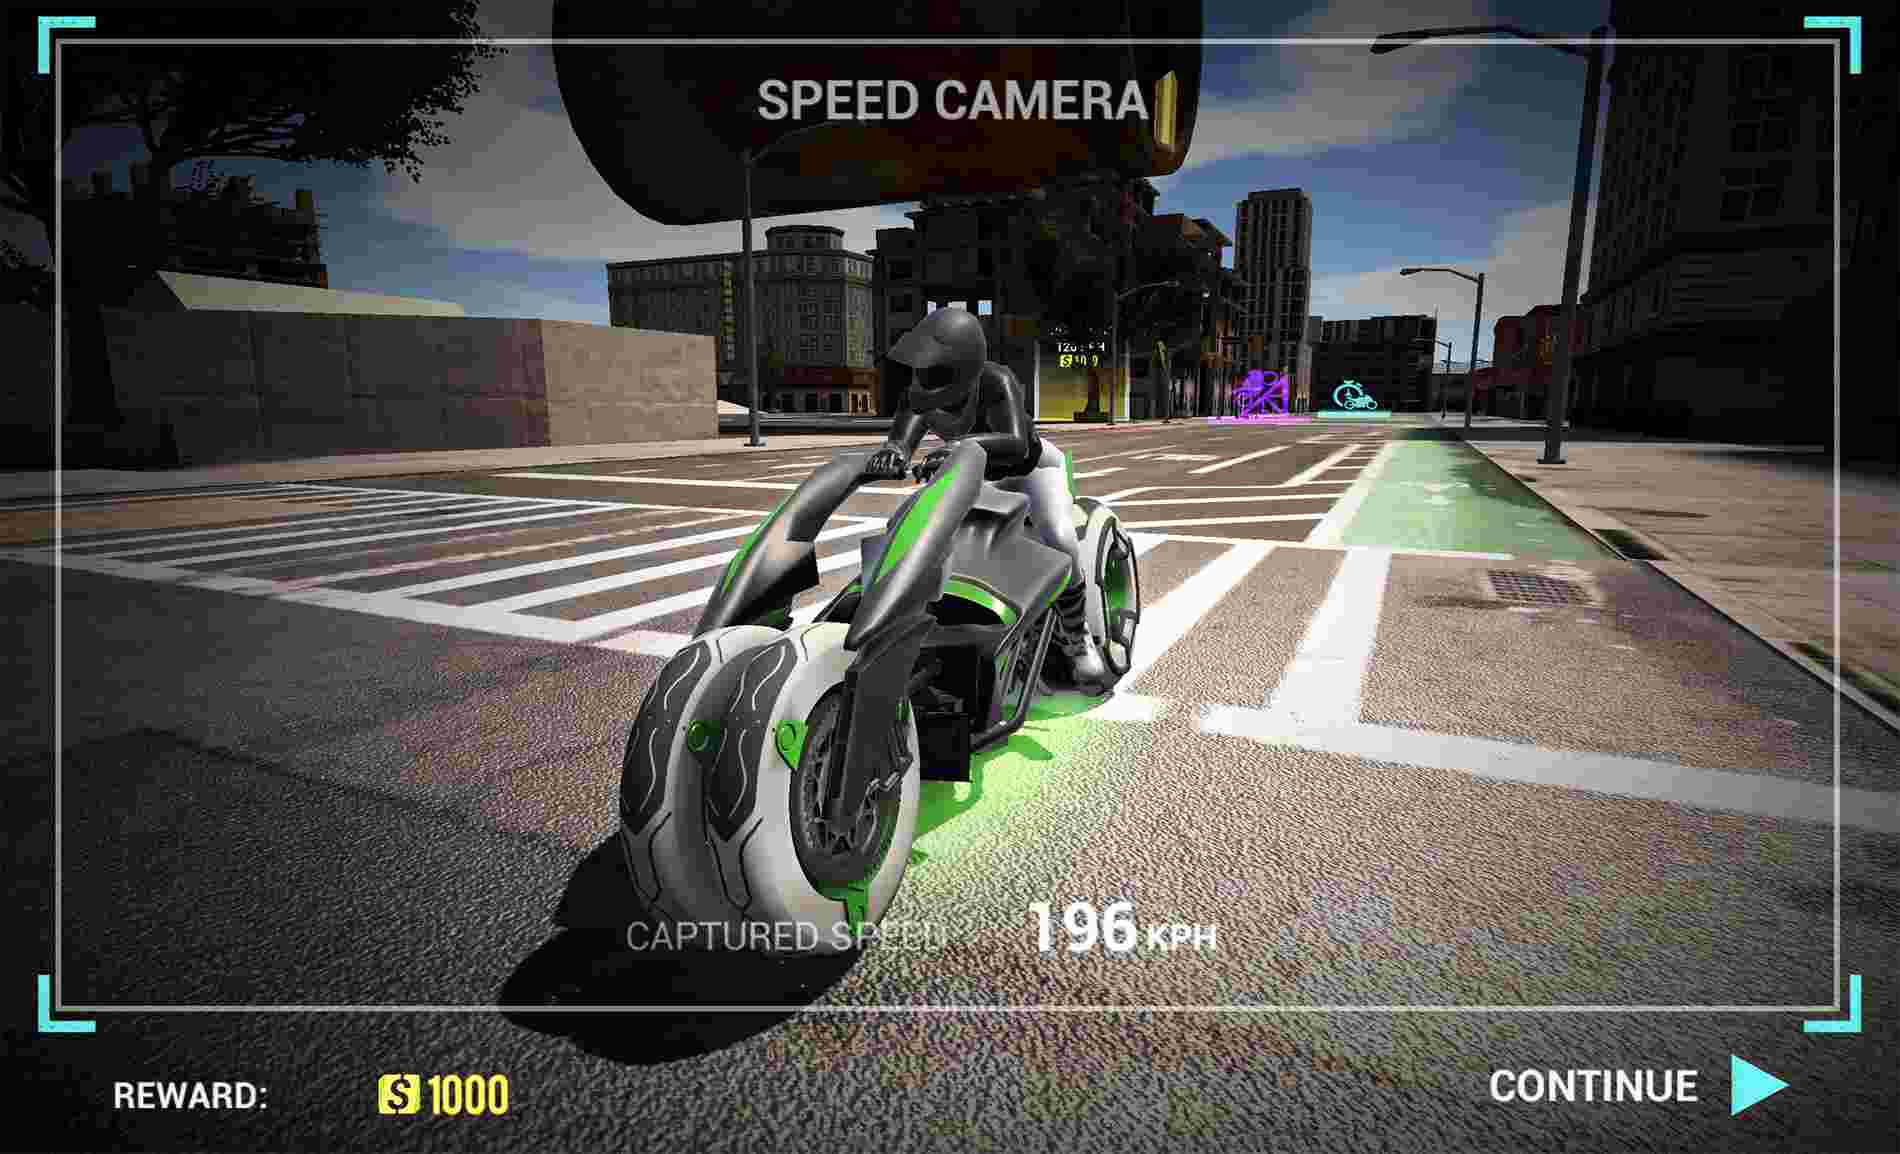 Ultimate Motorcycle Simulator 3.73 APK MOD [Menu LMH, Huge Amount Of Money gold gems, unlocked all bikes, premium]